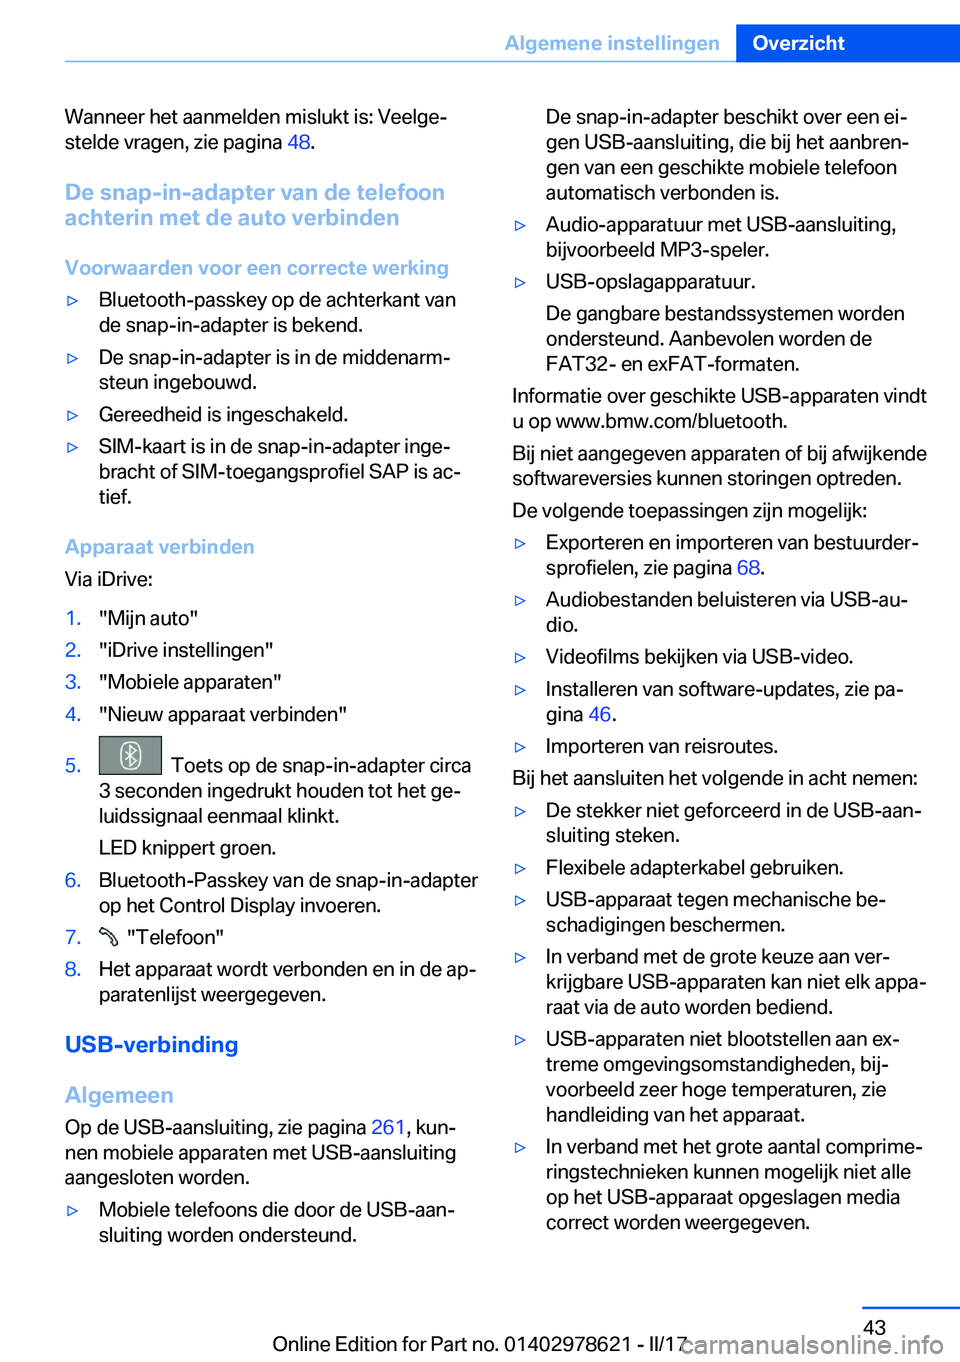 BMW 7 SERIES 2018  Instructieboekjes (in Dutch) �W�a�n�n�e�e�r� �h�e�t� �a�a�n�m�e�l�d�e�n� �m�i�s�l�u�k�t� �i�s�:� �V�e�e�l�g�ej�s�t�e�l�d�e� �v�r�a�g�e�n�,� �z�i�e� �p�a�g�i�n�a�  �4�8�.
�D�e��s�n�a�p�-�i�n�-�a�d�a�p�t�e�r��v�a�n��d�e��t�e�l